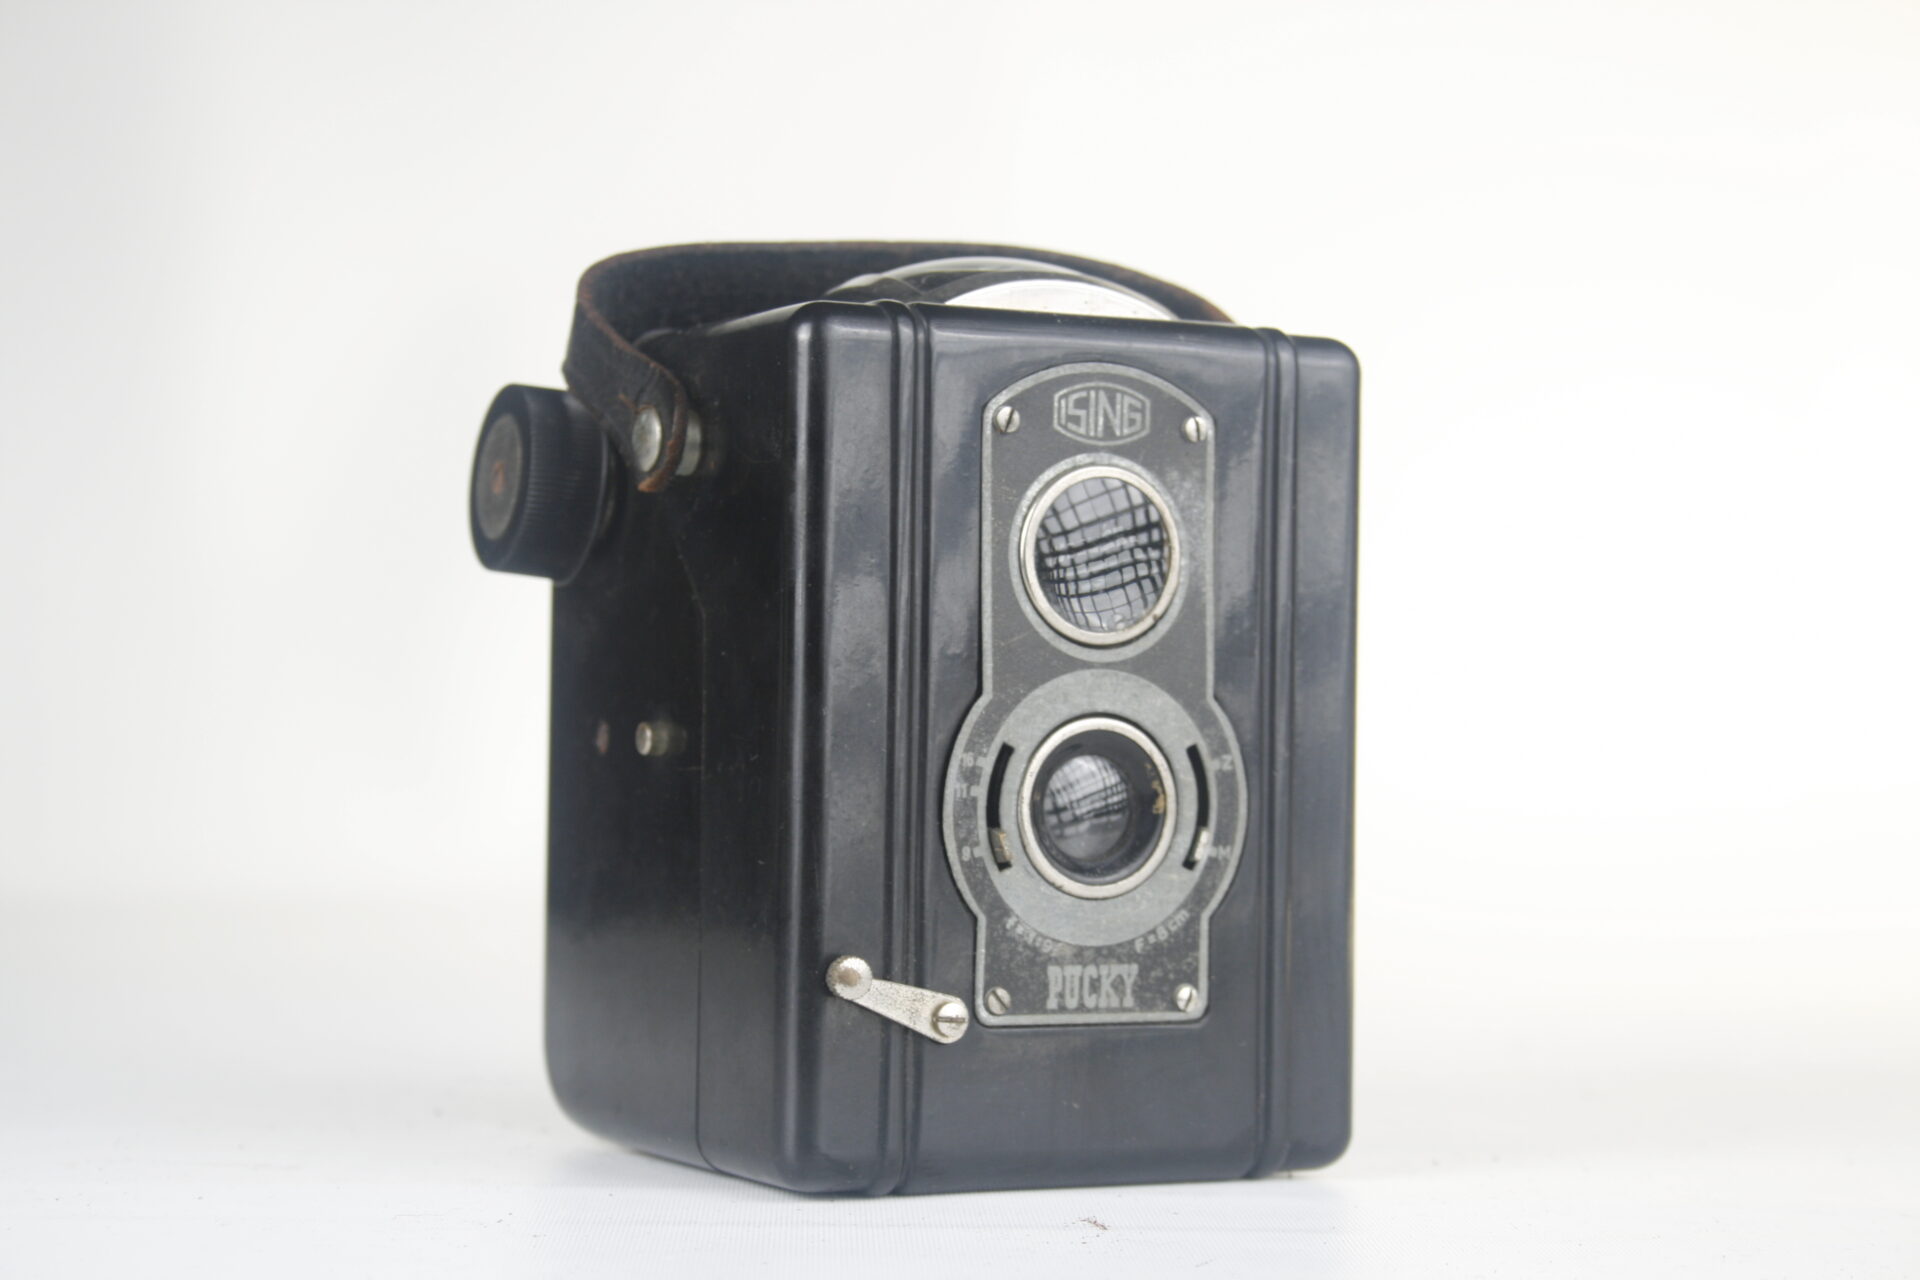 Ising Pucky. 6×6. Pseudo TLR camera. 1950. Duitsland.